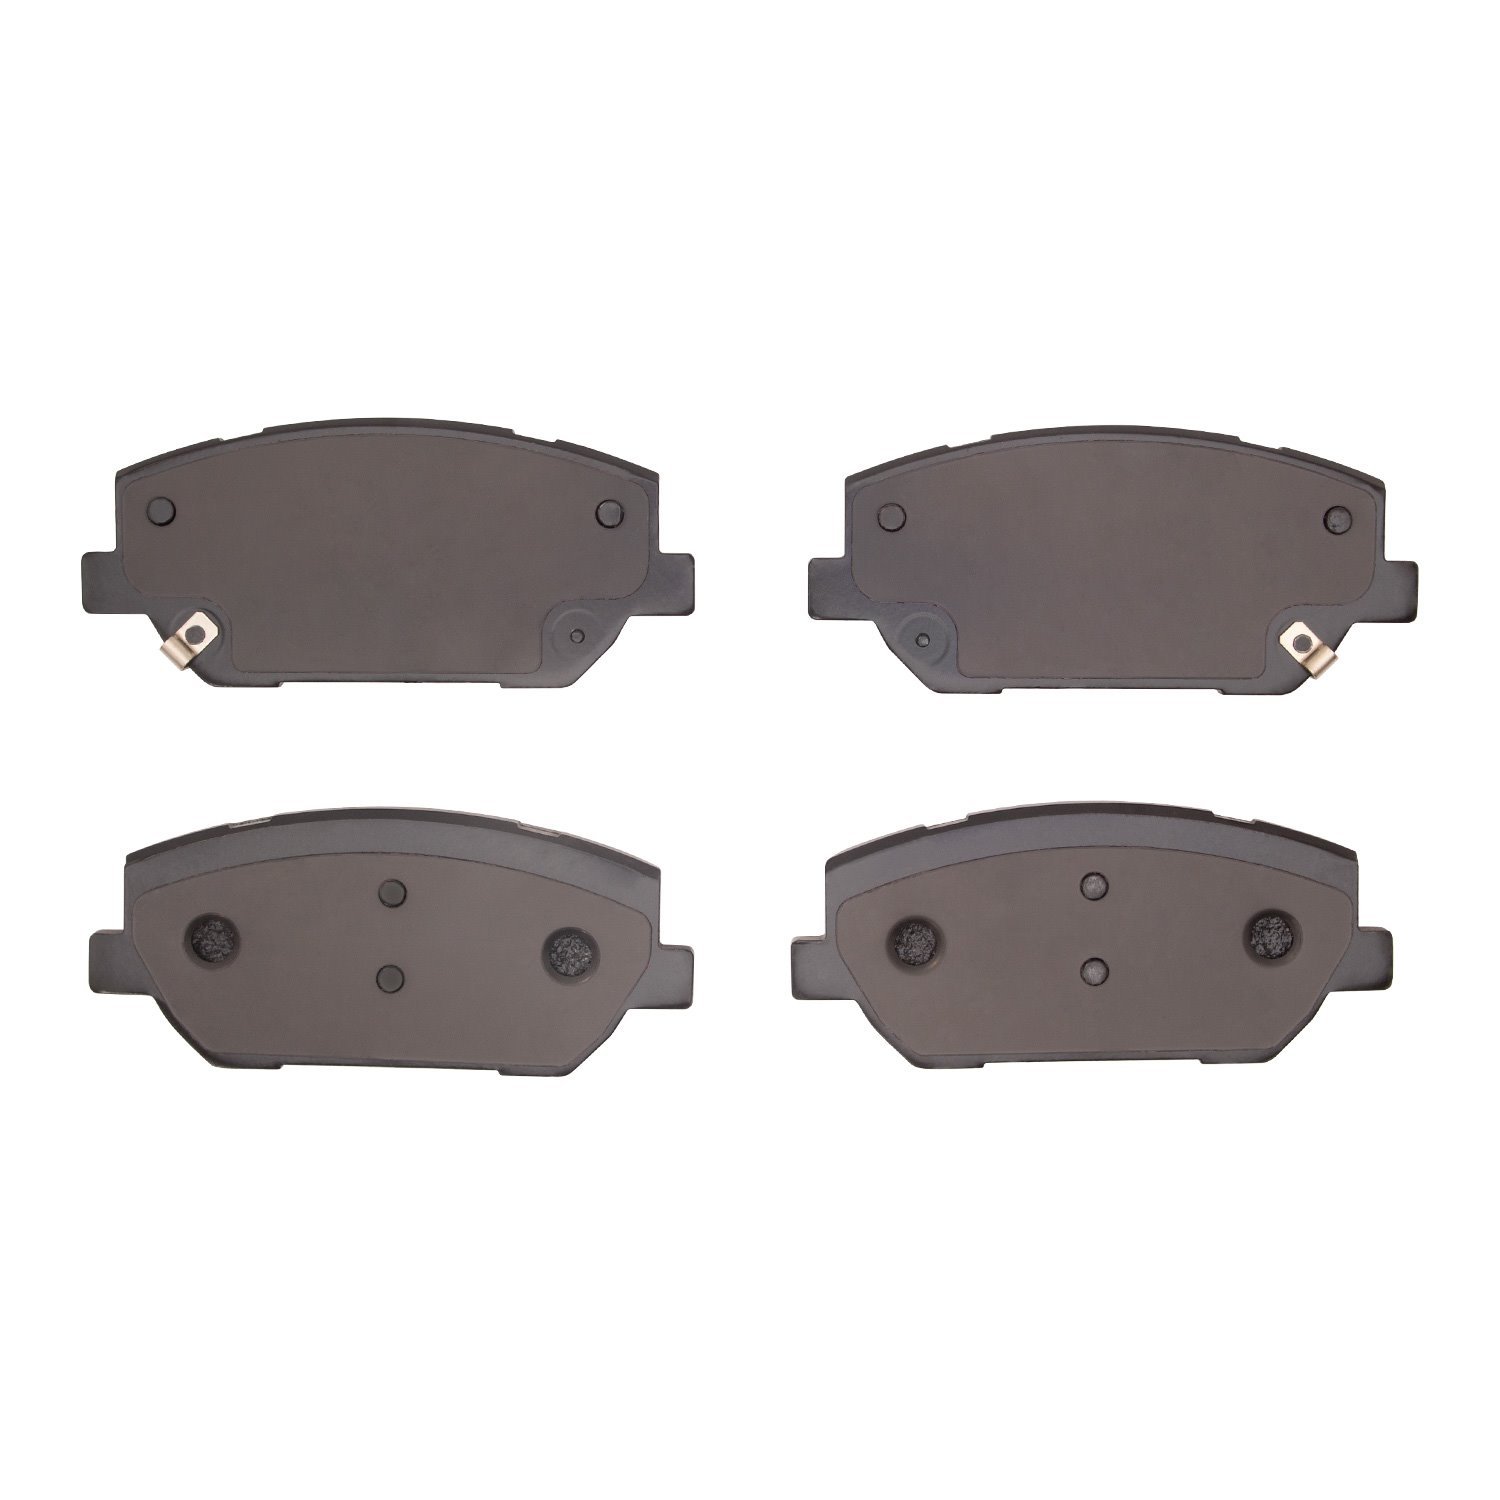 1310-2198-00 3000-Series Ceramic Brake Pads, 2019-2020 Kia/Hyundai/Genesis, Position: Front